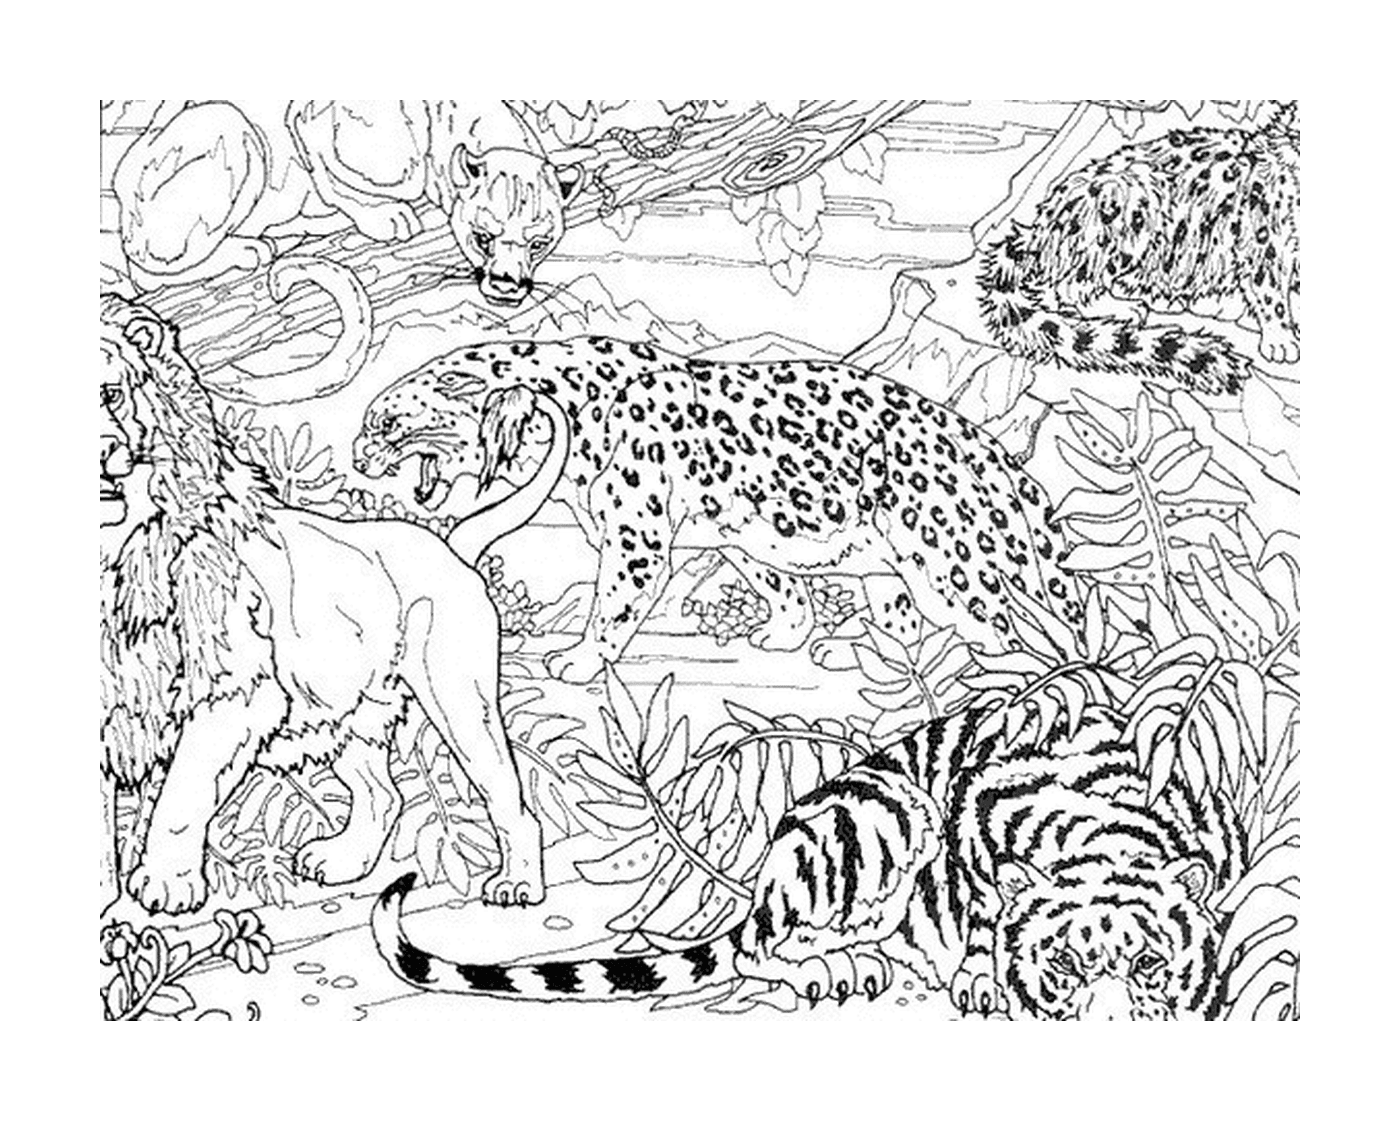  Леопард и два тигра в джунглях 